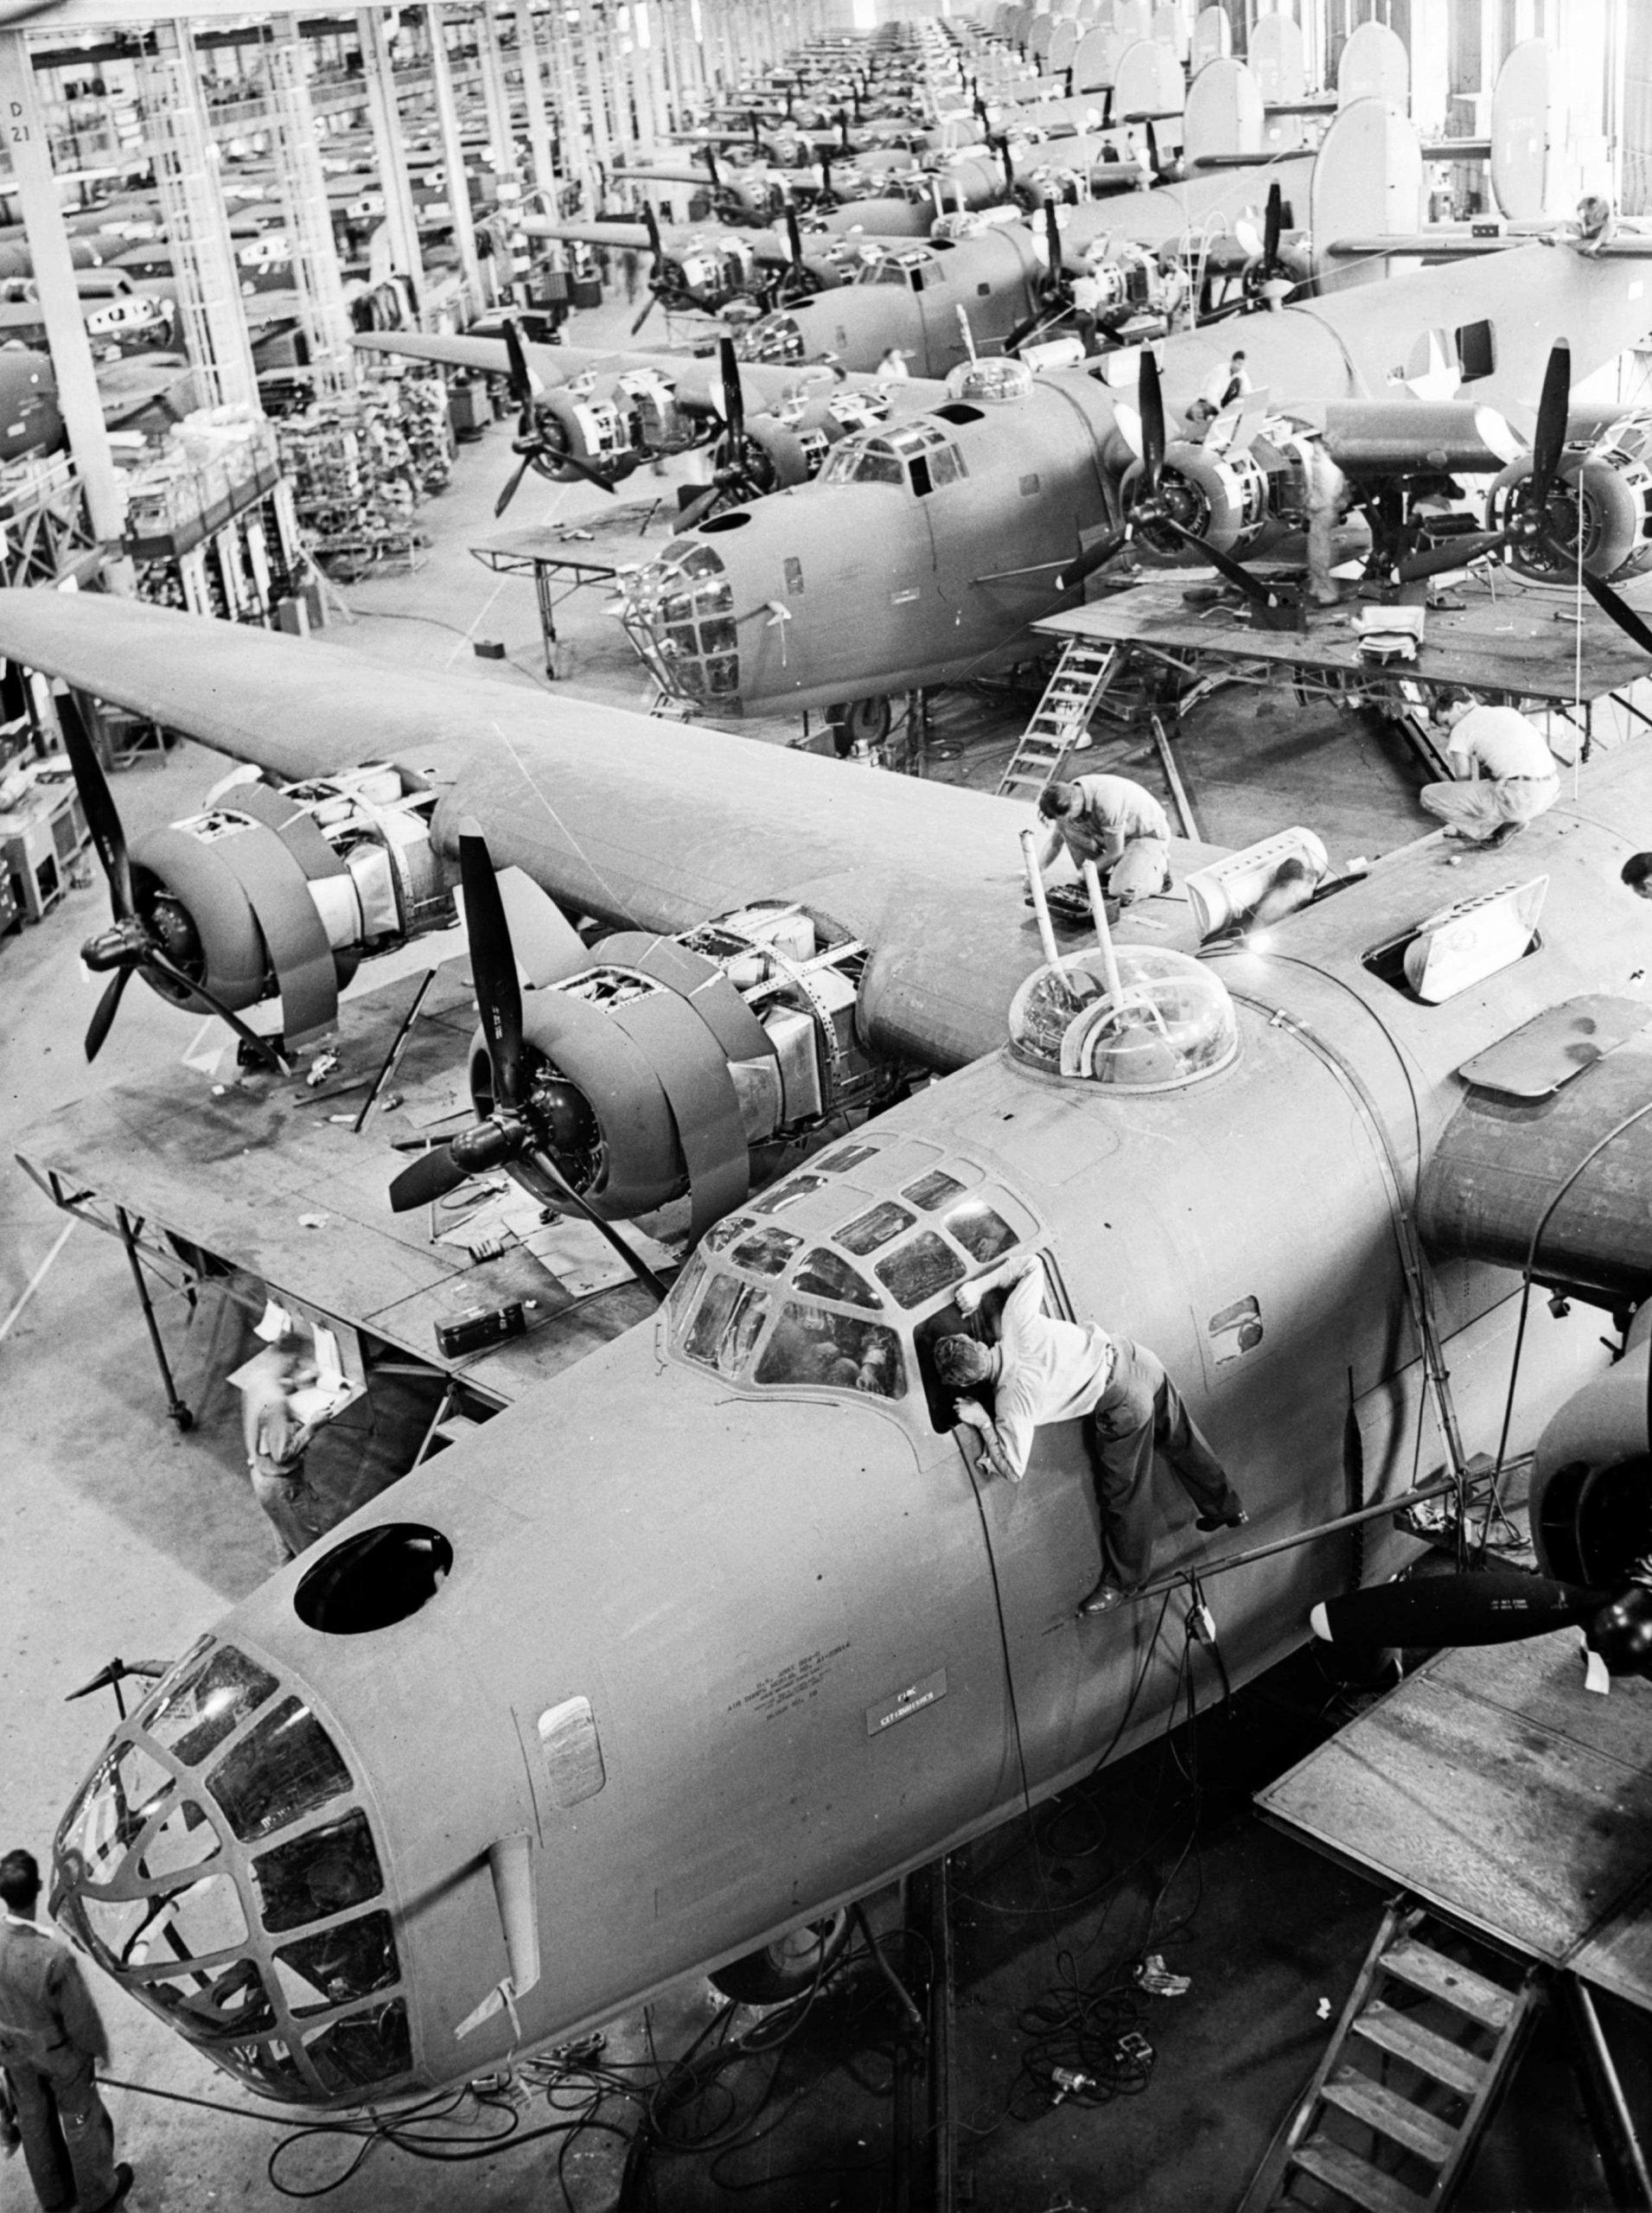 B-24 Liberator bombers